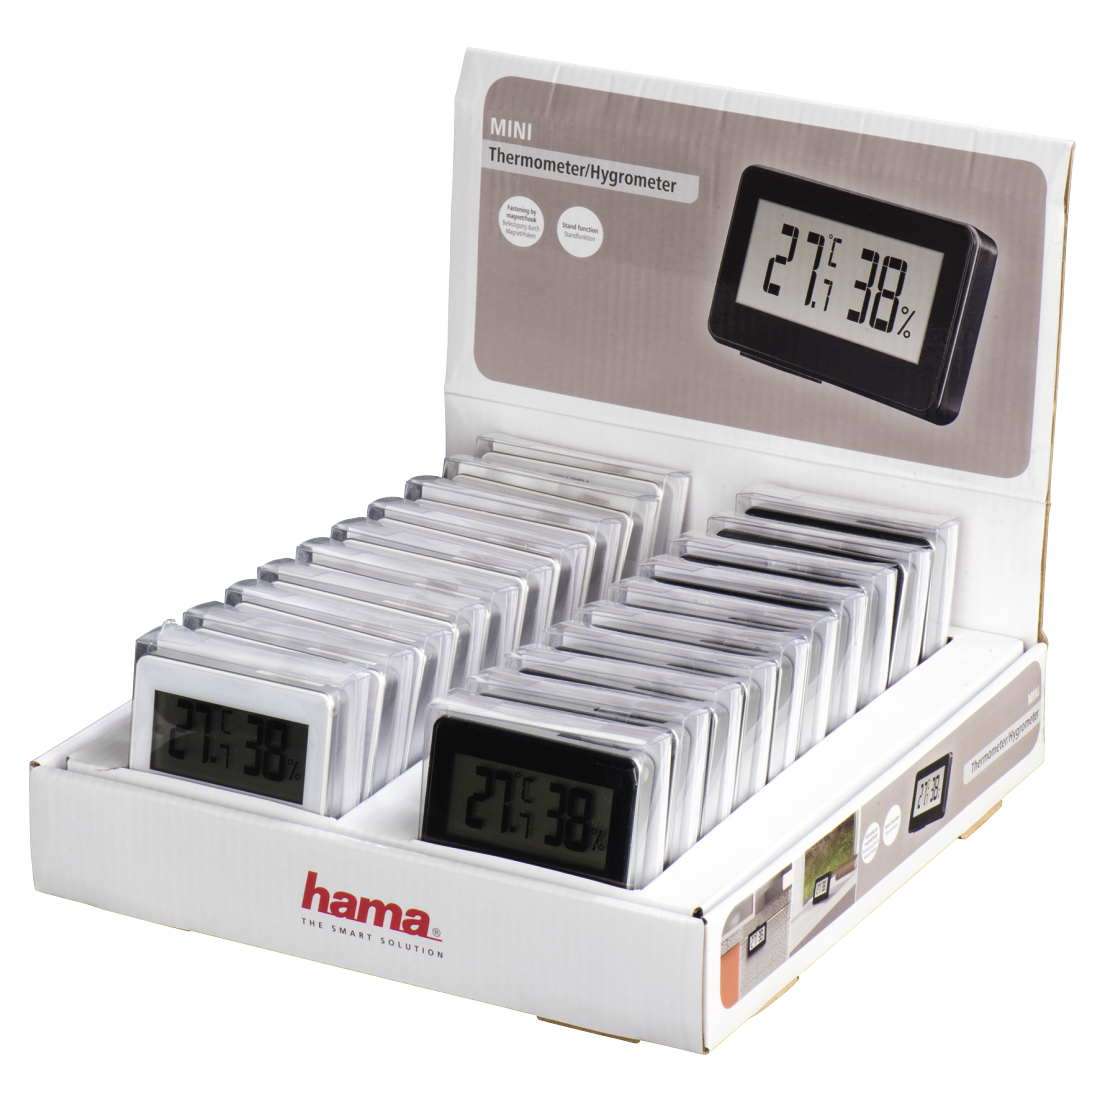 Hama "Mini" Thermometer/Hygrometer, black/white, 20 pieces in a display box